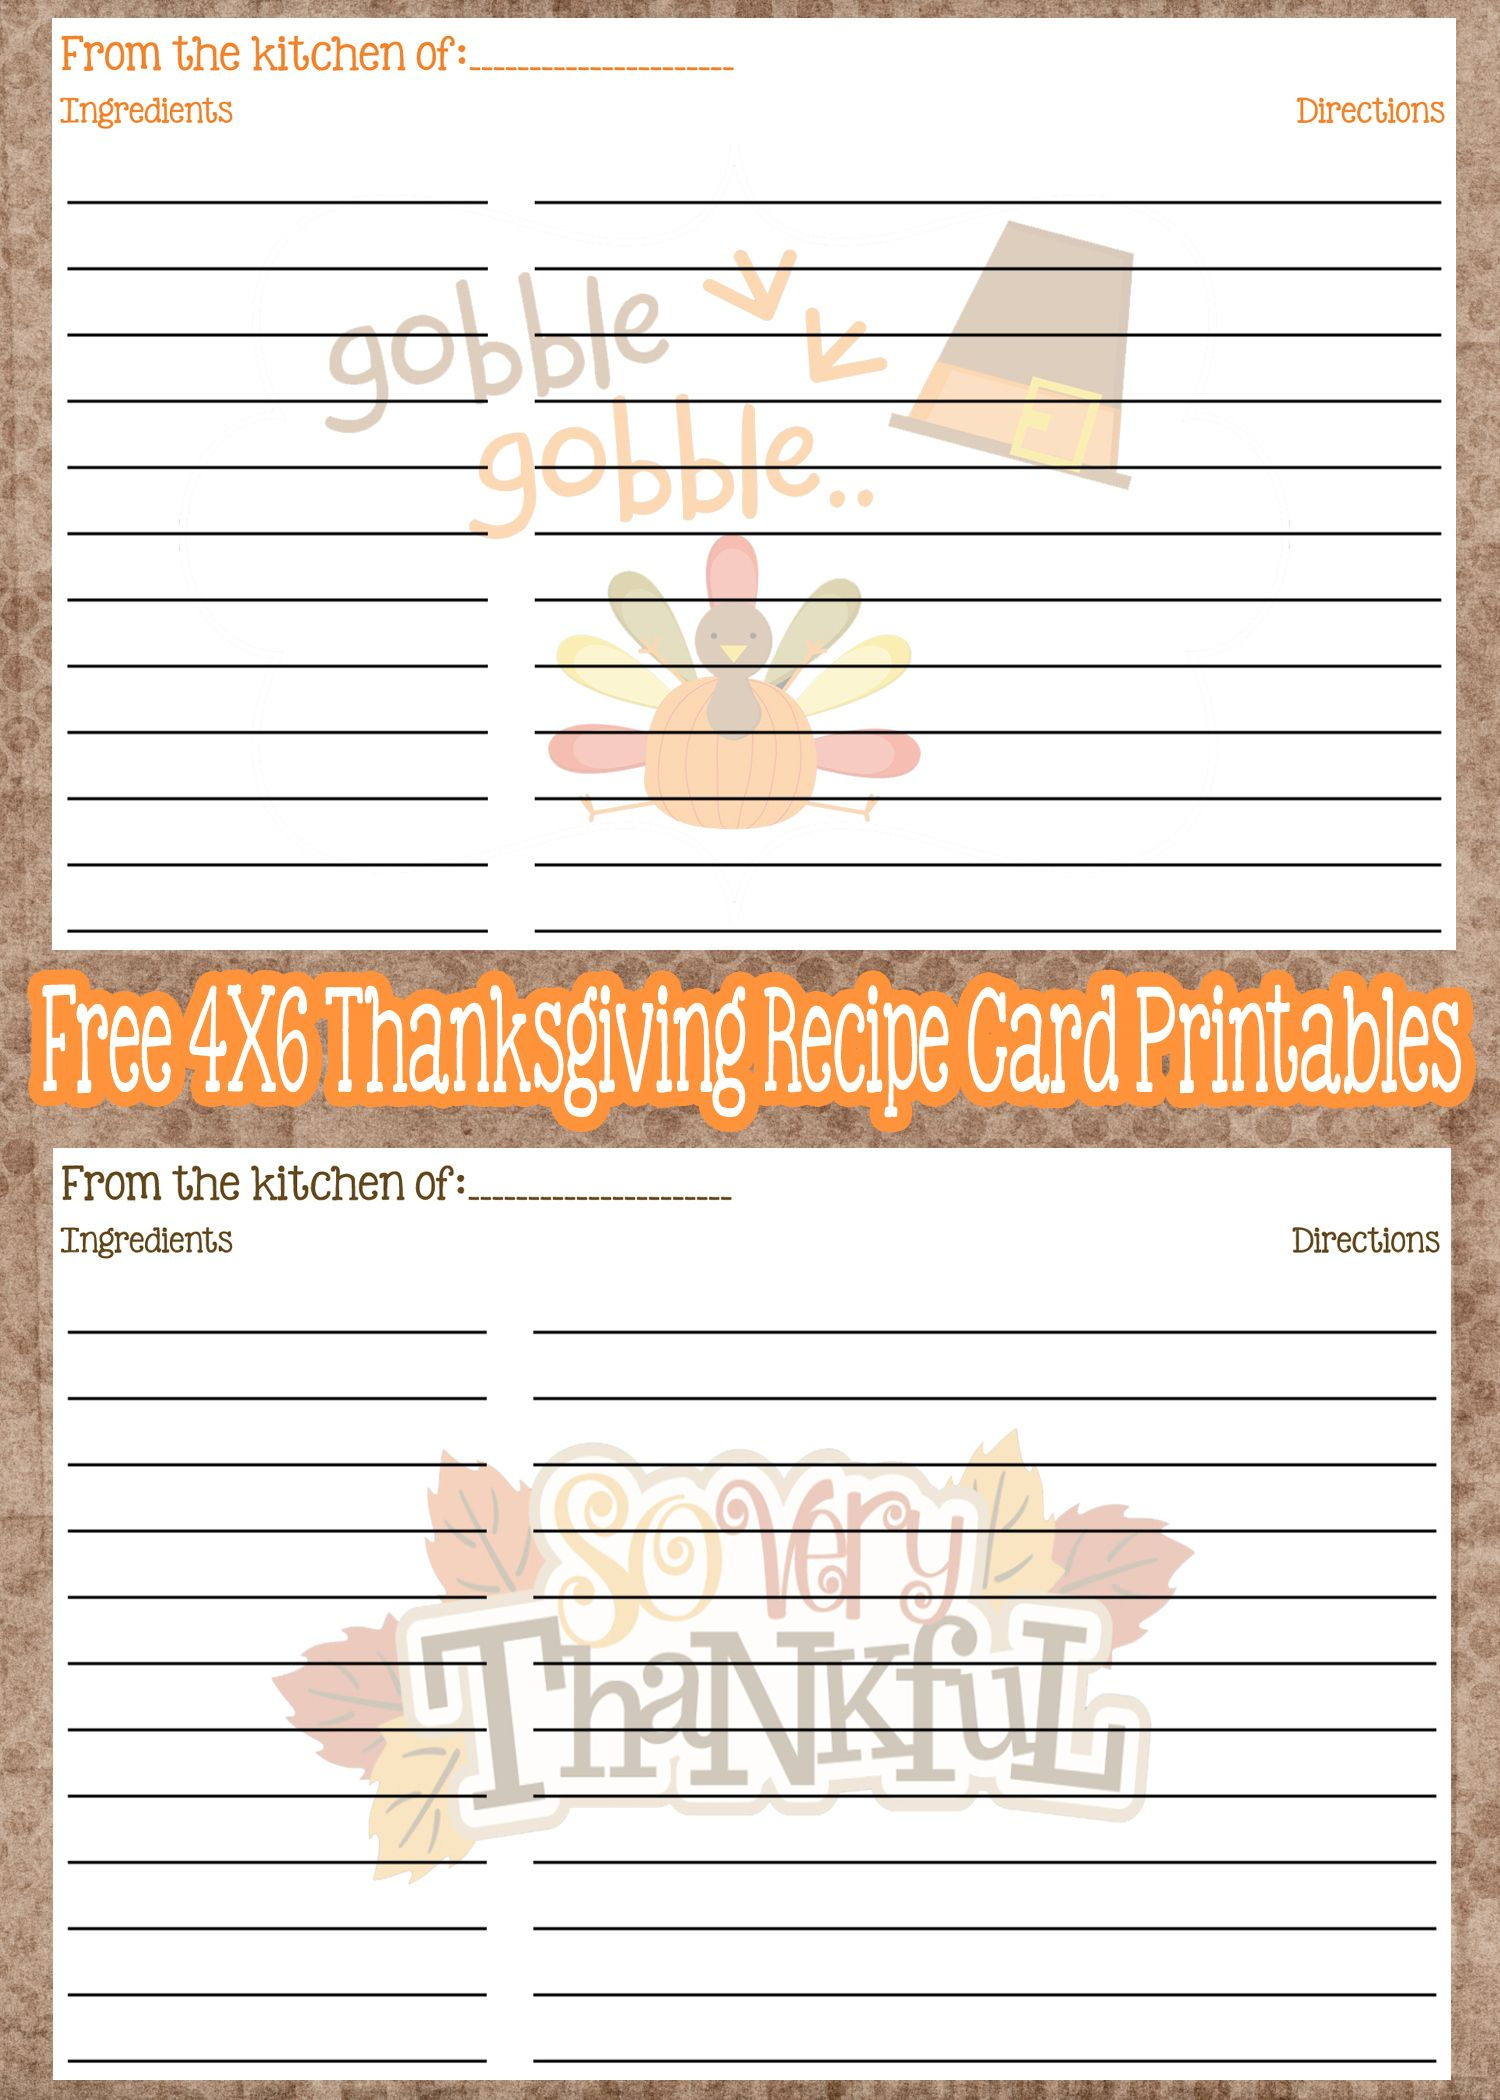 Free Printable Thanksgiving Recipe Cards | Budget | Pinterest - Free Printable Photo Cards 4X6